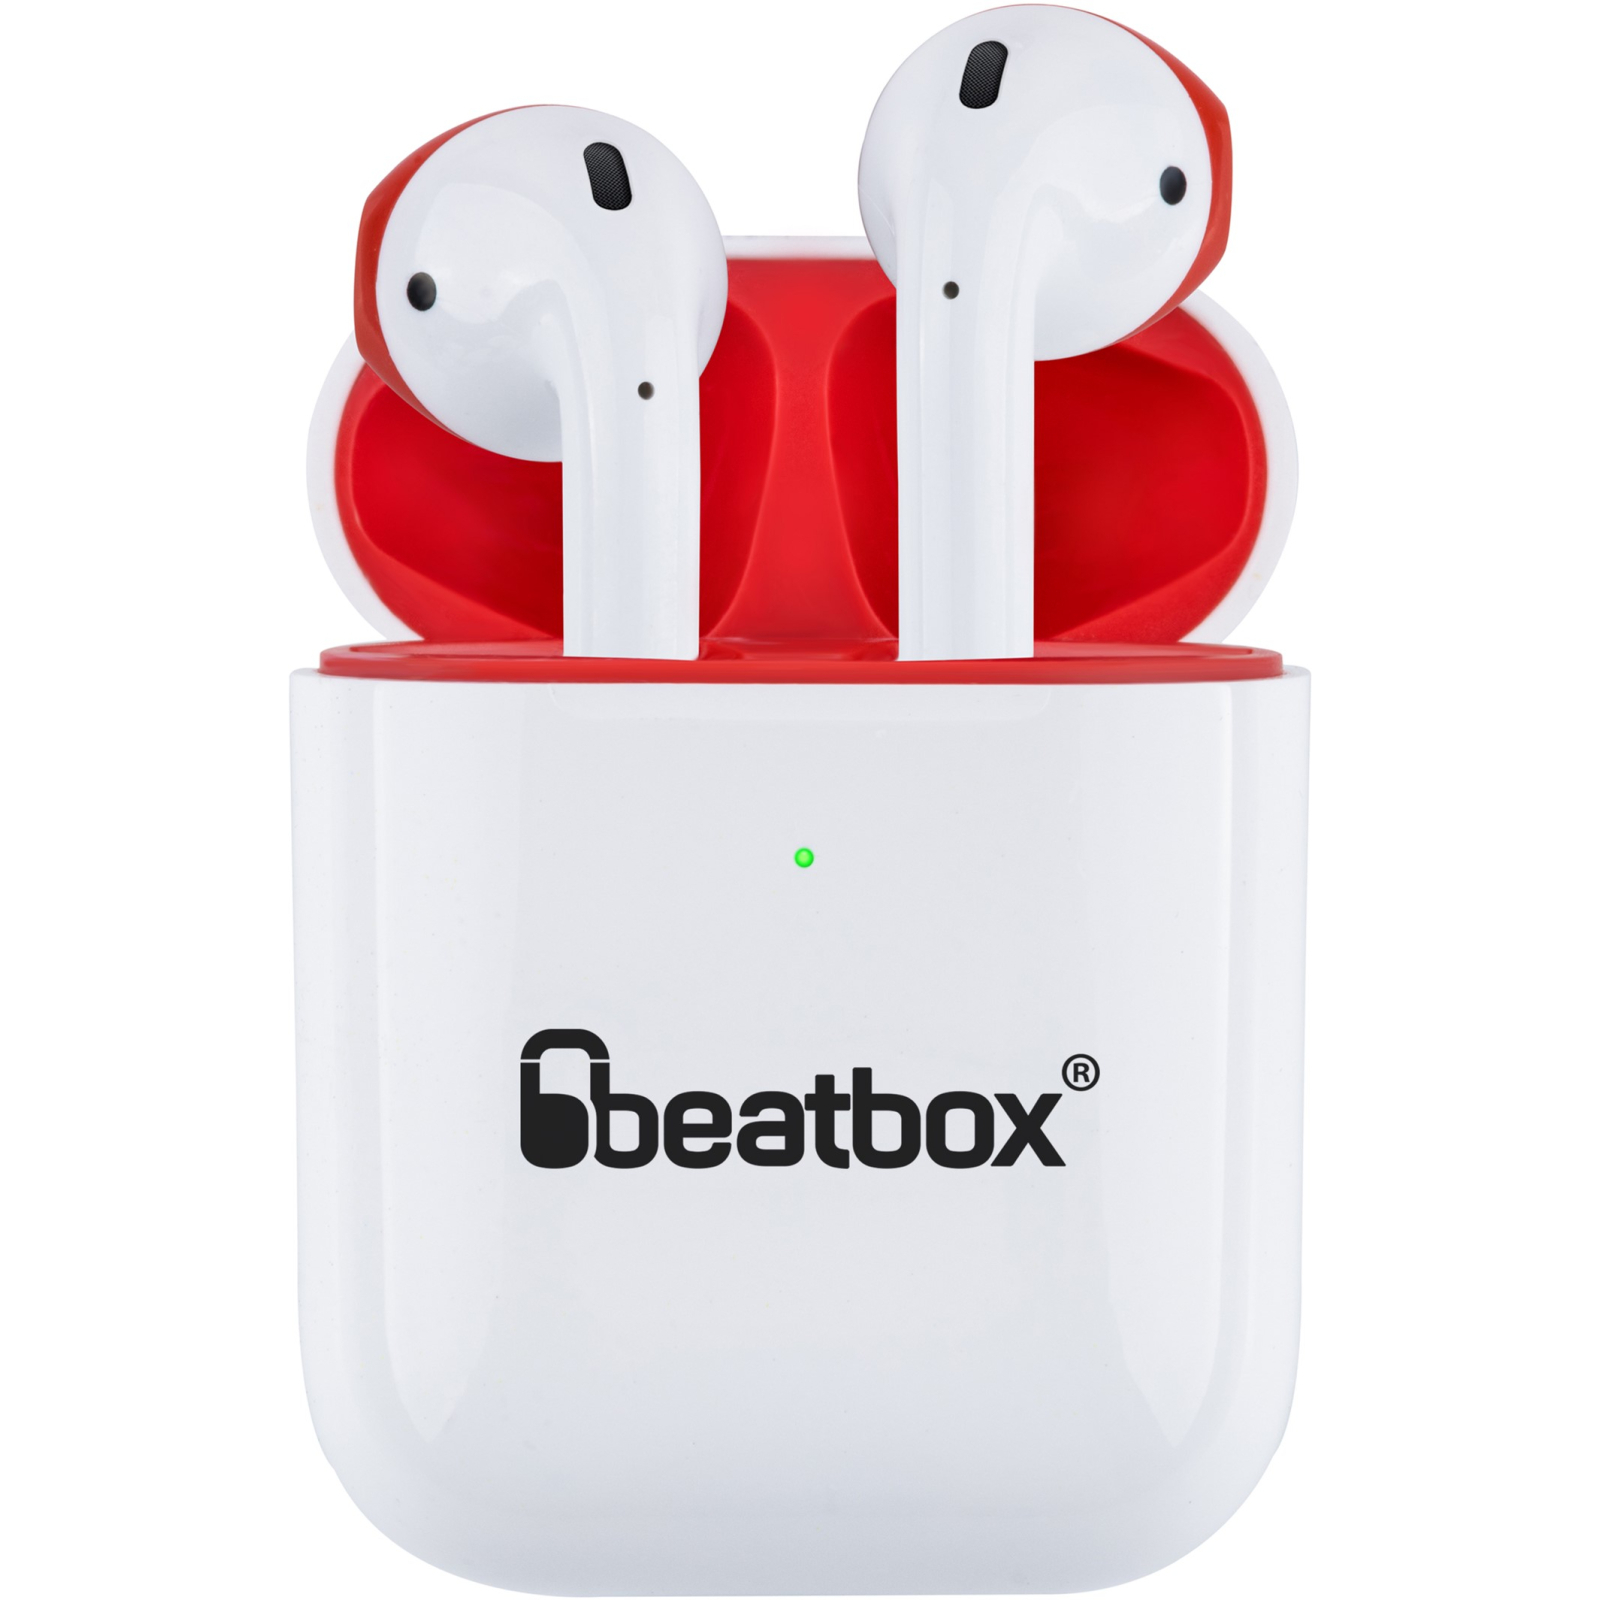 Навушники BeatBox PODS AIR 2 Wireless Charging Black (bbpair2wcb)